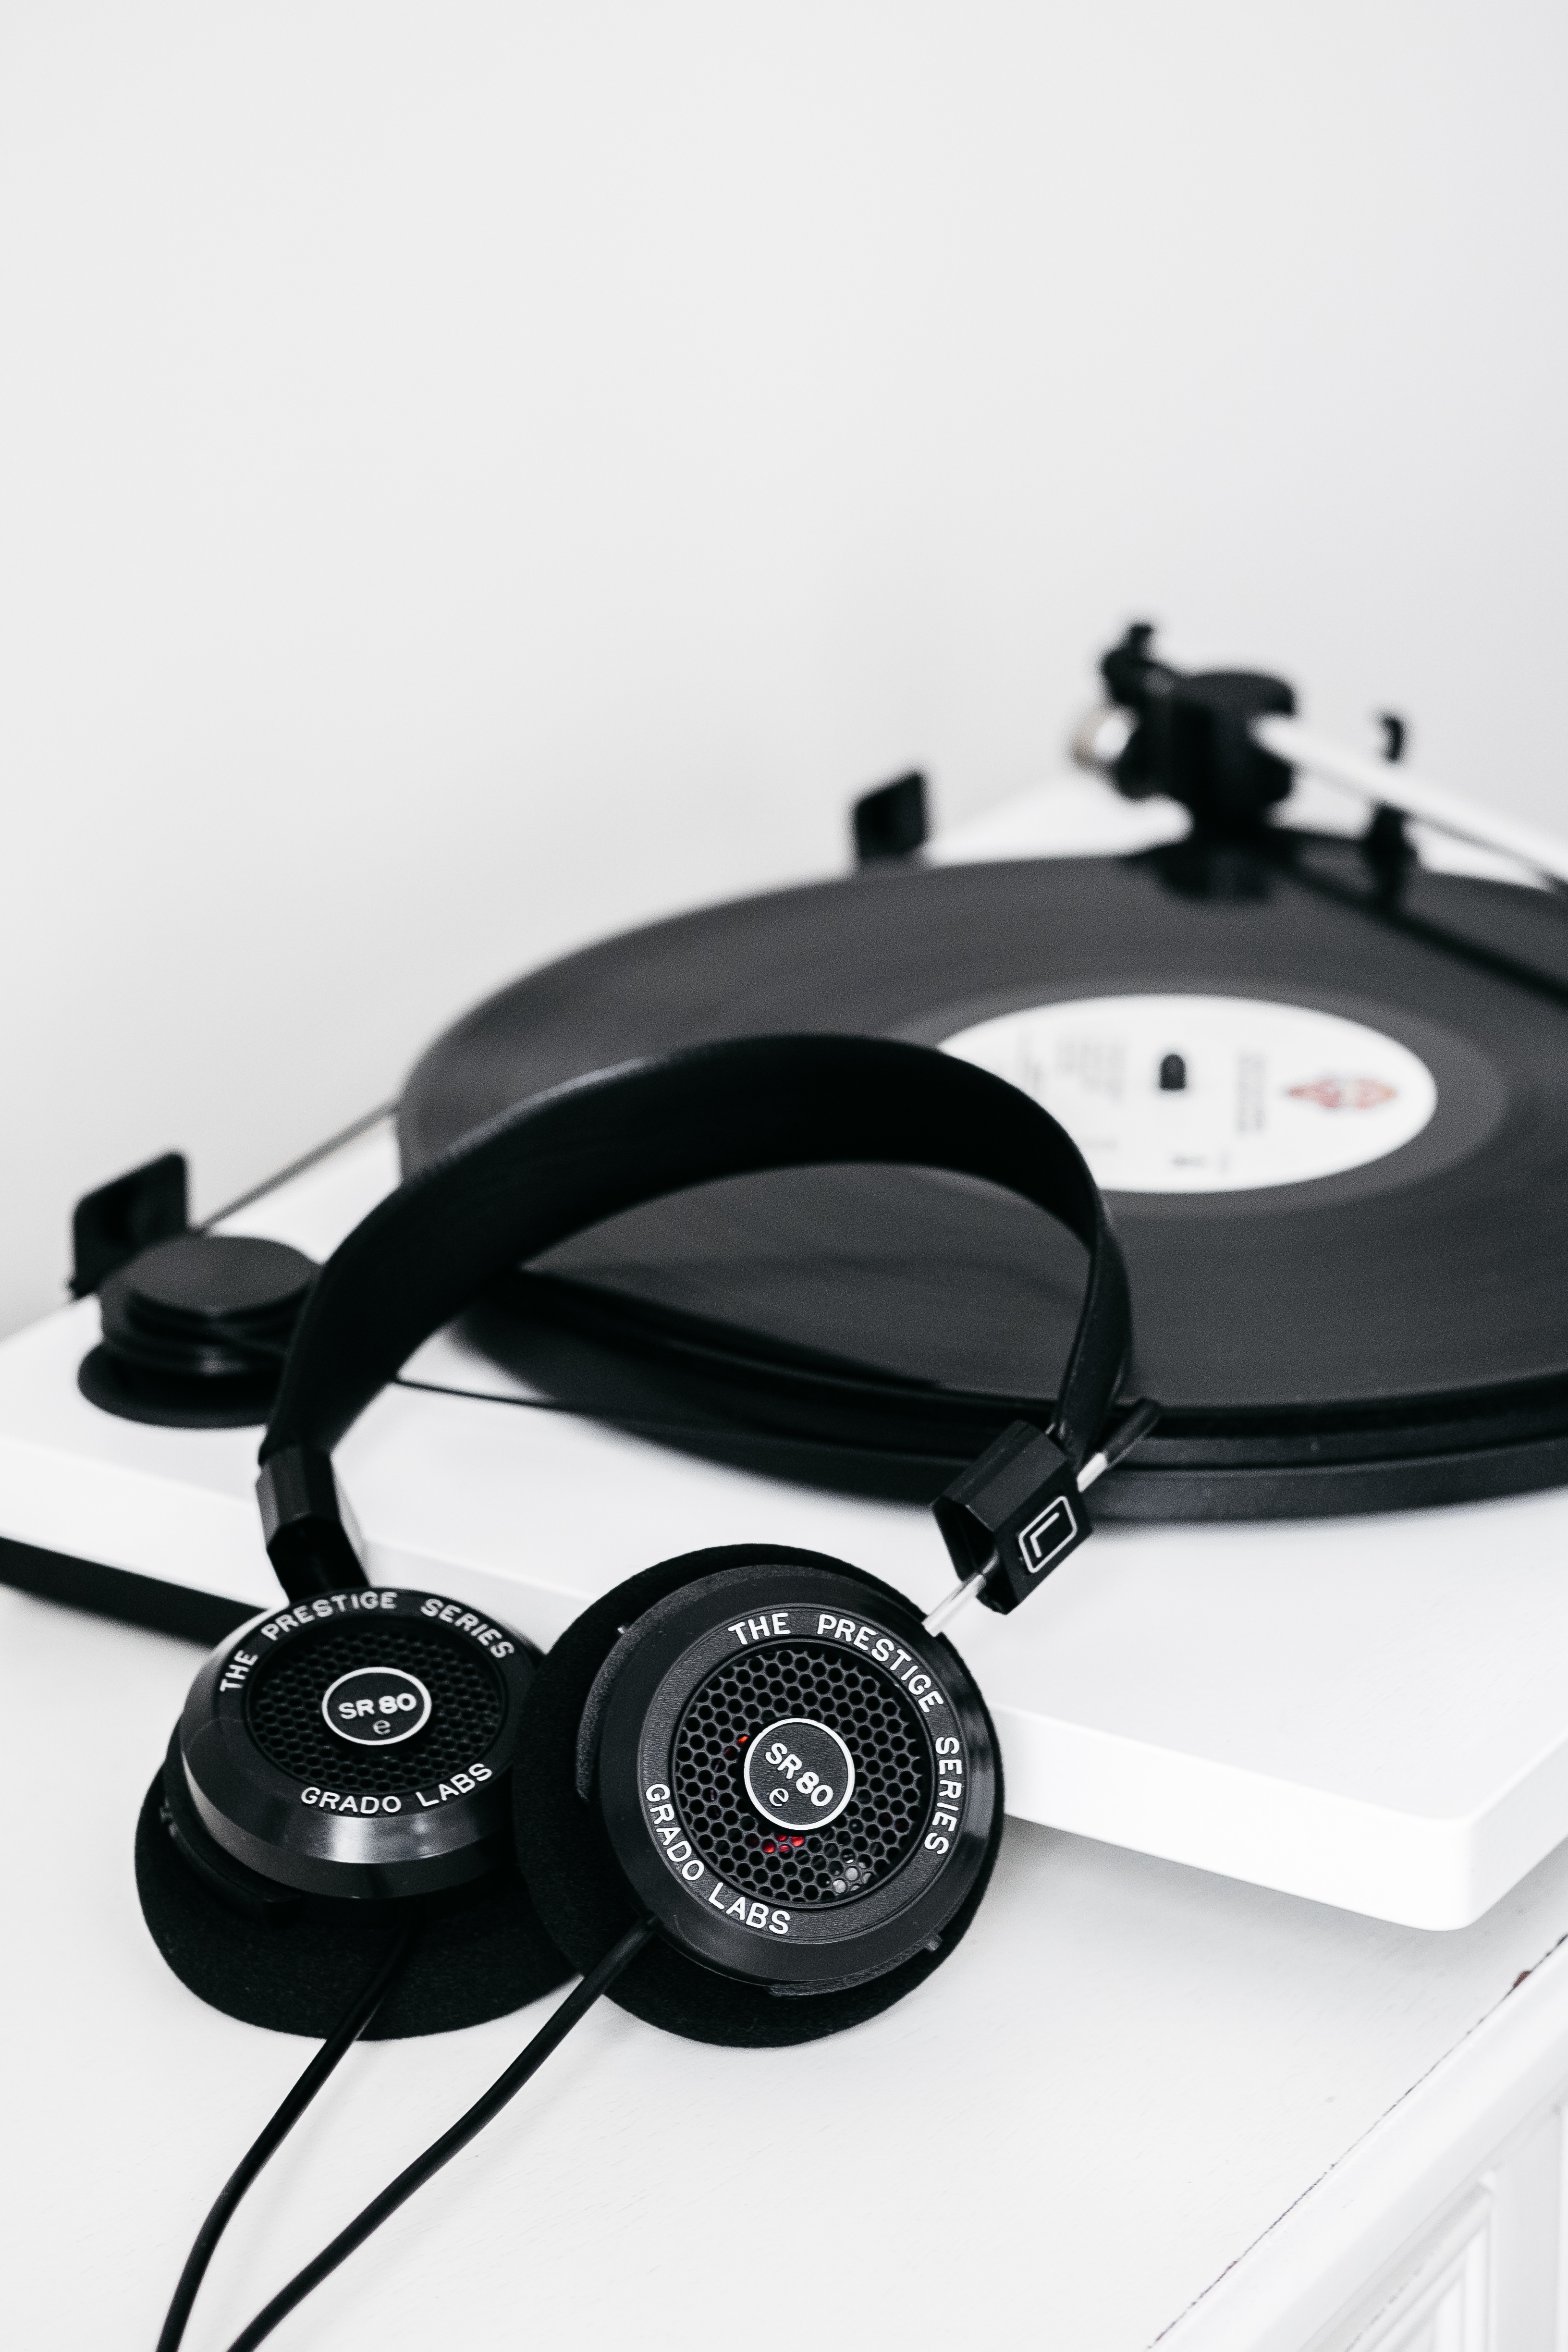 vinyl, record player, headphones, black, music, plate, turntable